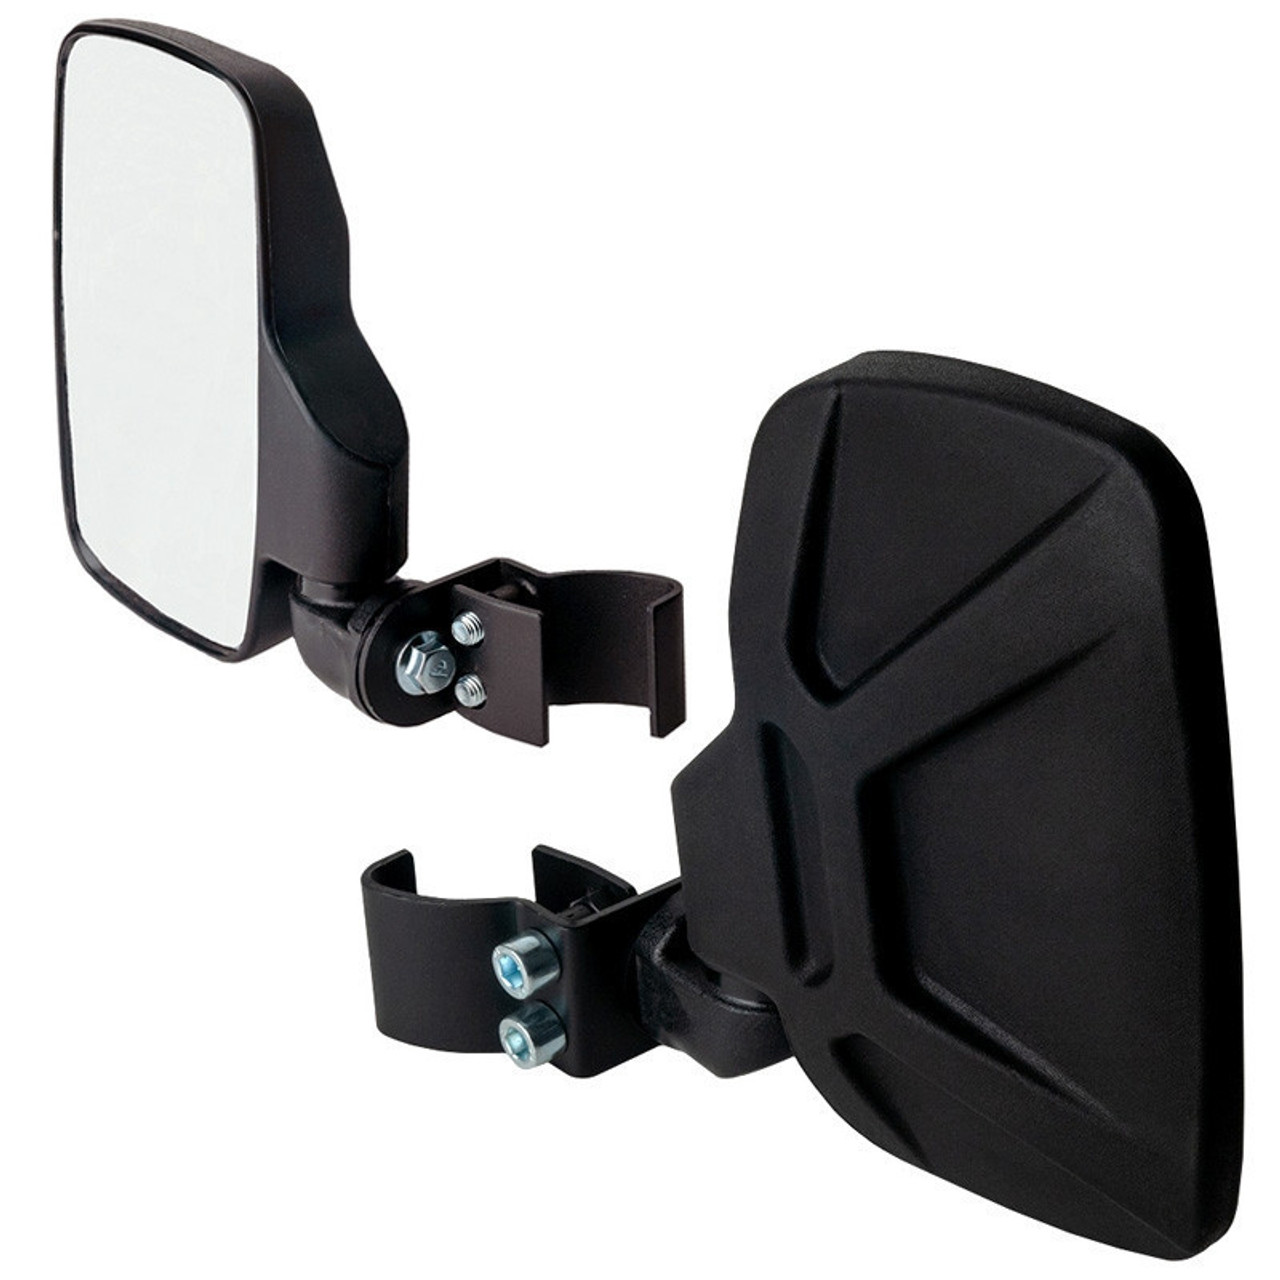 Polaris Ranger 900 XP 13-17 Pro Fit Cab UTV Pair Of Side View Mirrors (was